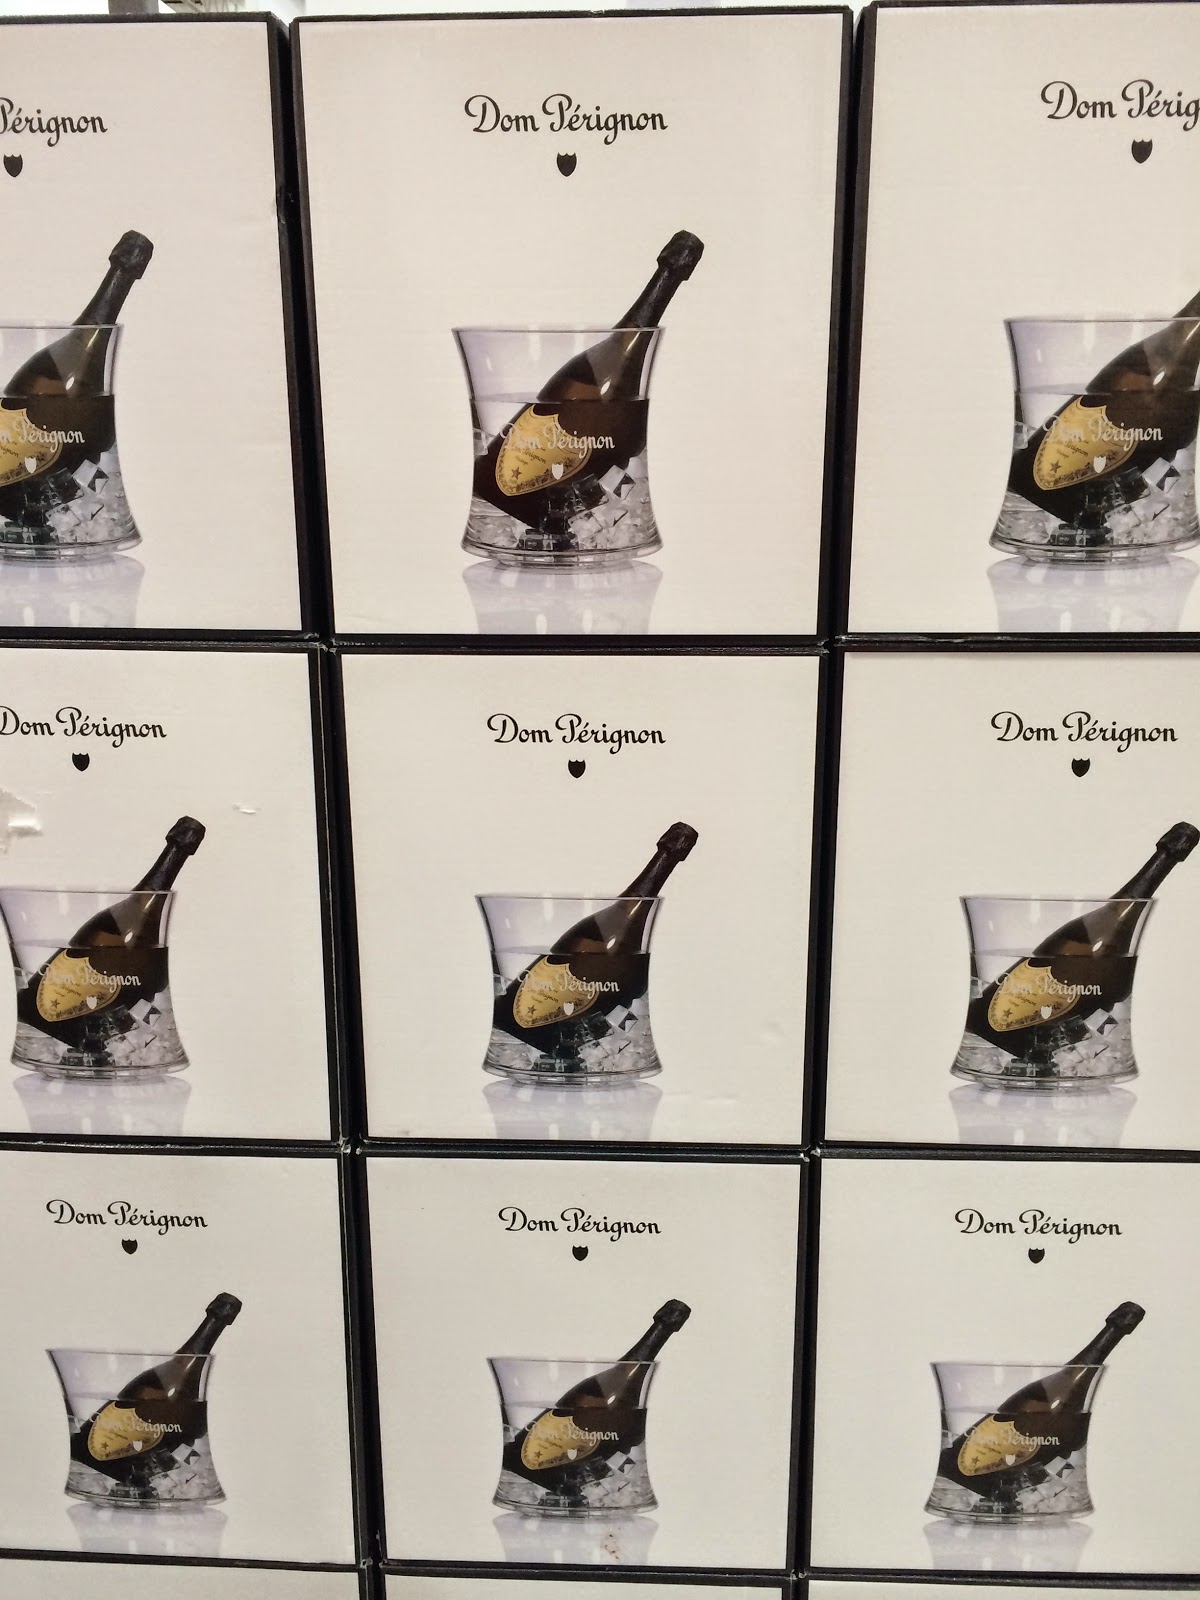 Costco Sells Giant 6-Liter Bottles of Veuve Clicquot